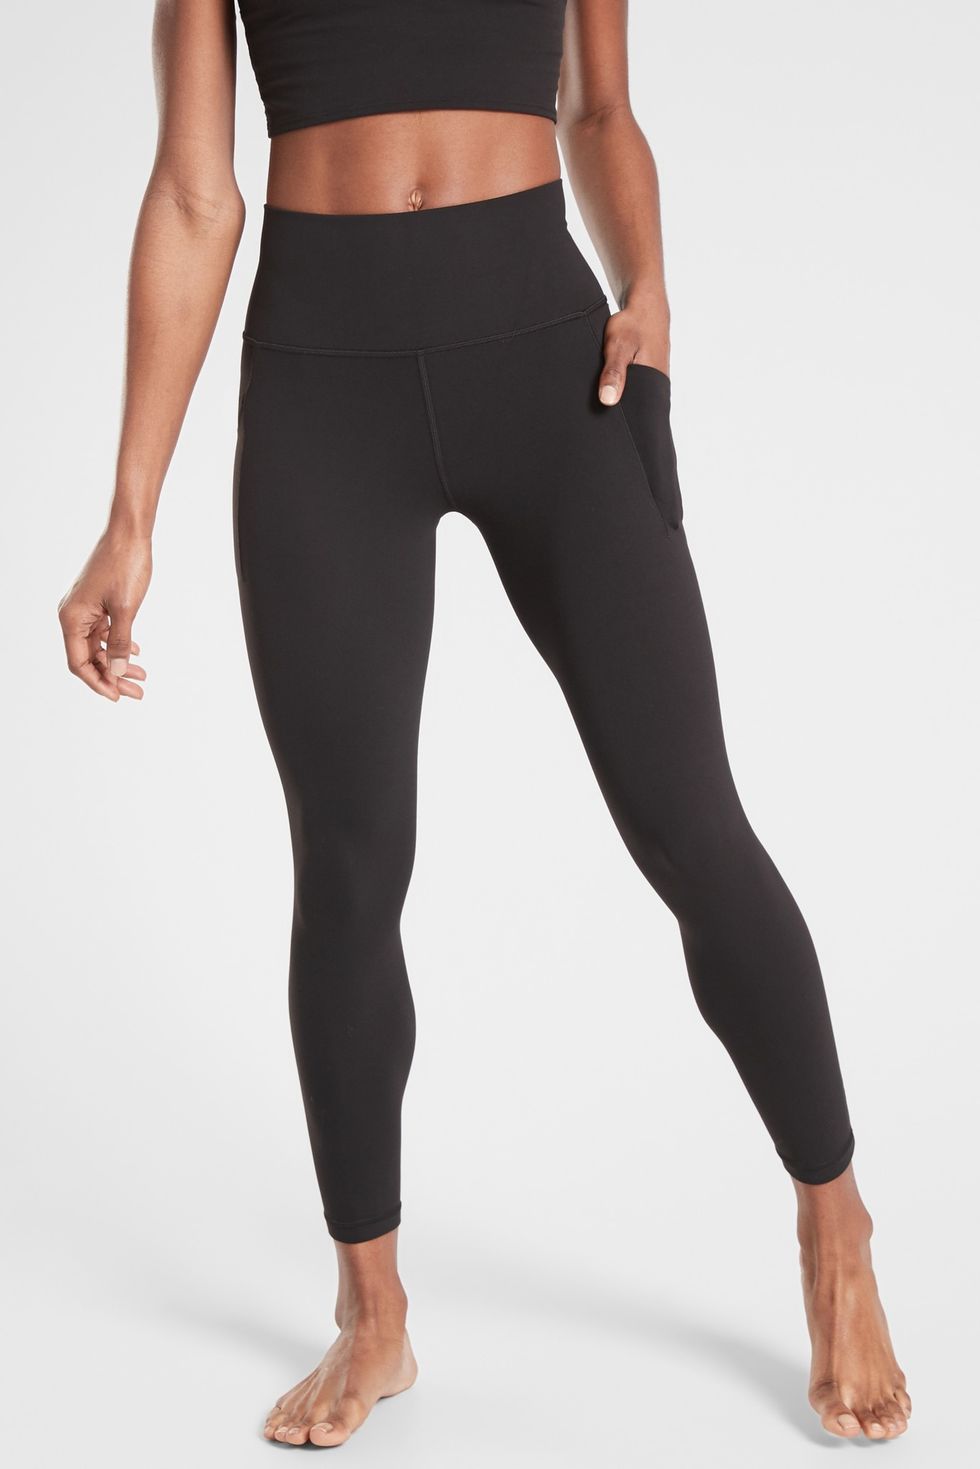 Betabrand Classic Straight Leg Dress Yoga Pants - $28 - From Danielle